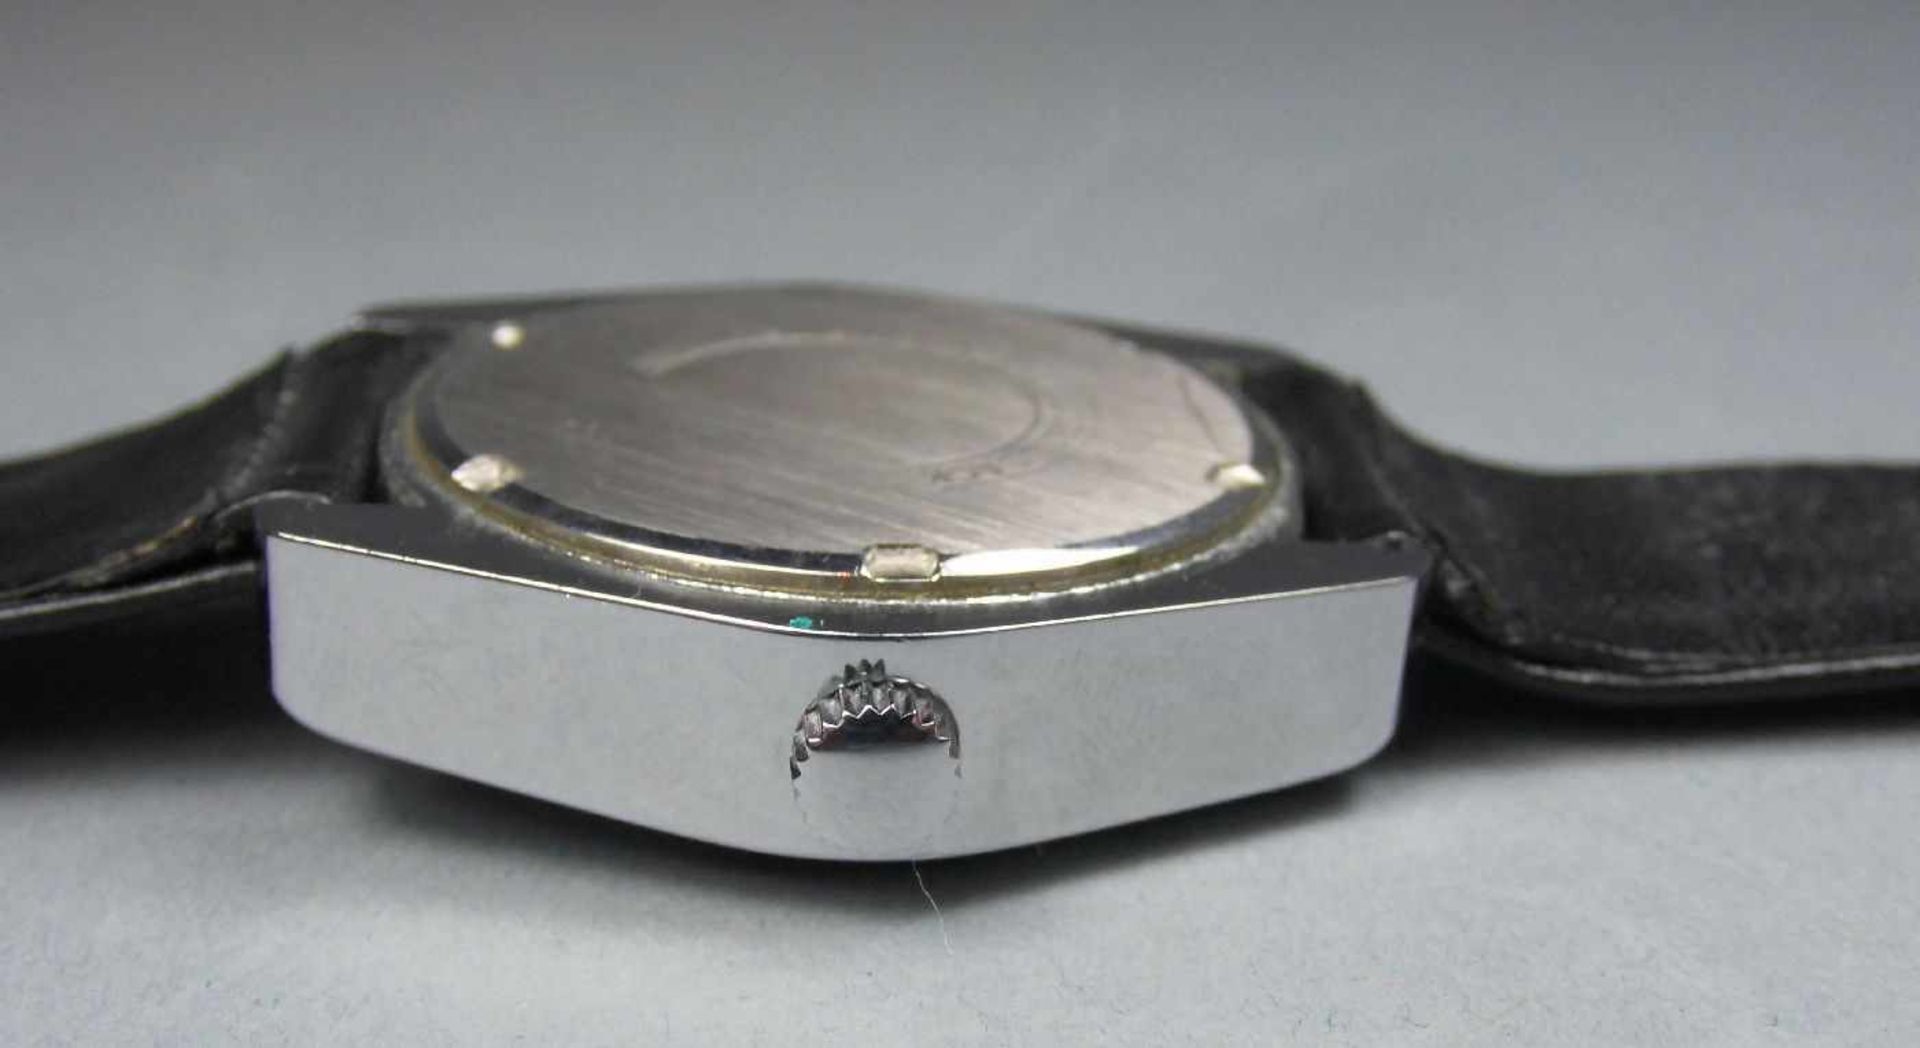 ARMBANDUHR: PRIMATO SUPER-AUTOMATIC / wristwatch, Manufaktur Ewald Fleck & Co. KG / Pforzheim. - Bild 4 aus 7